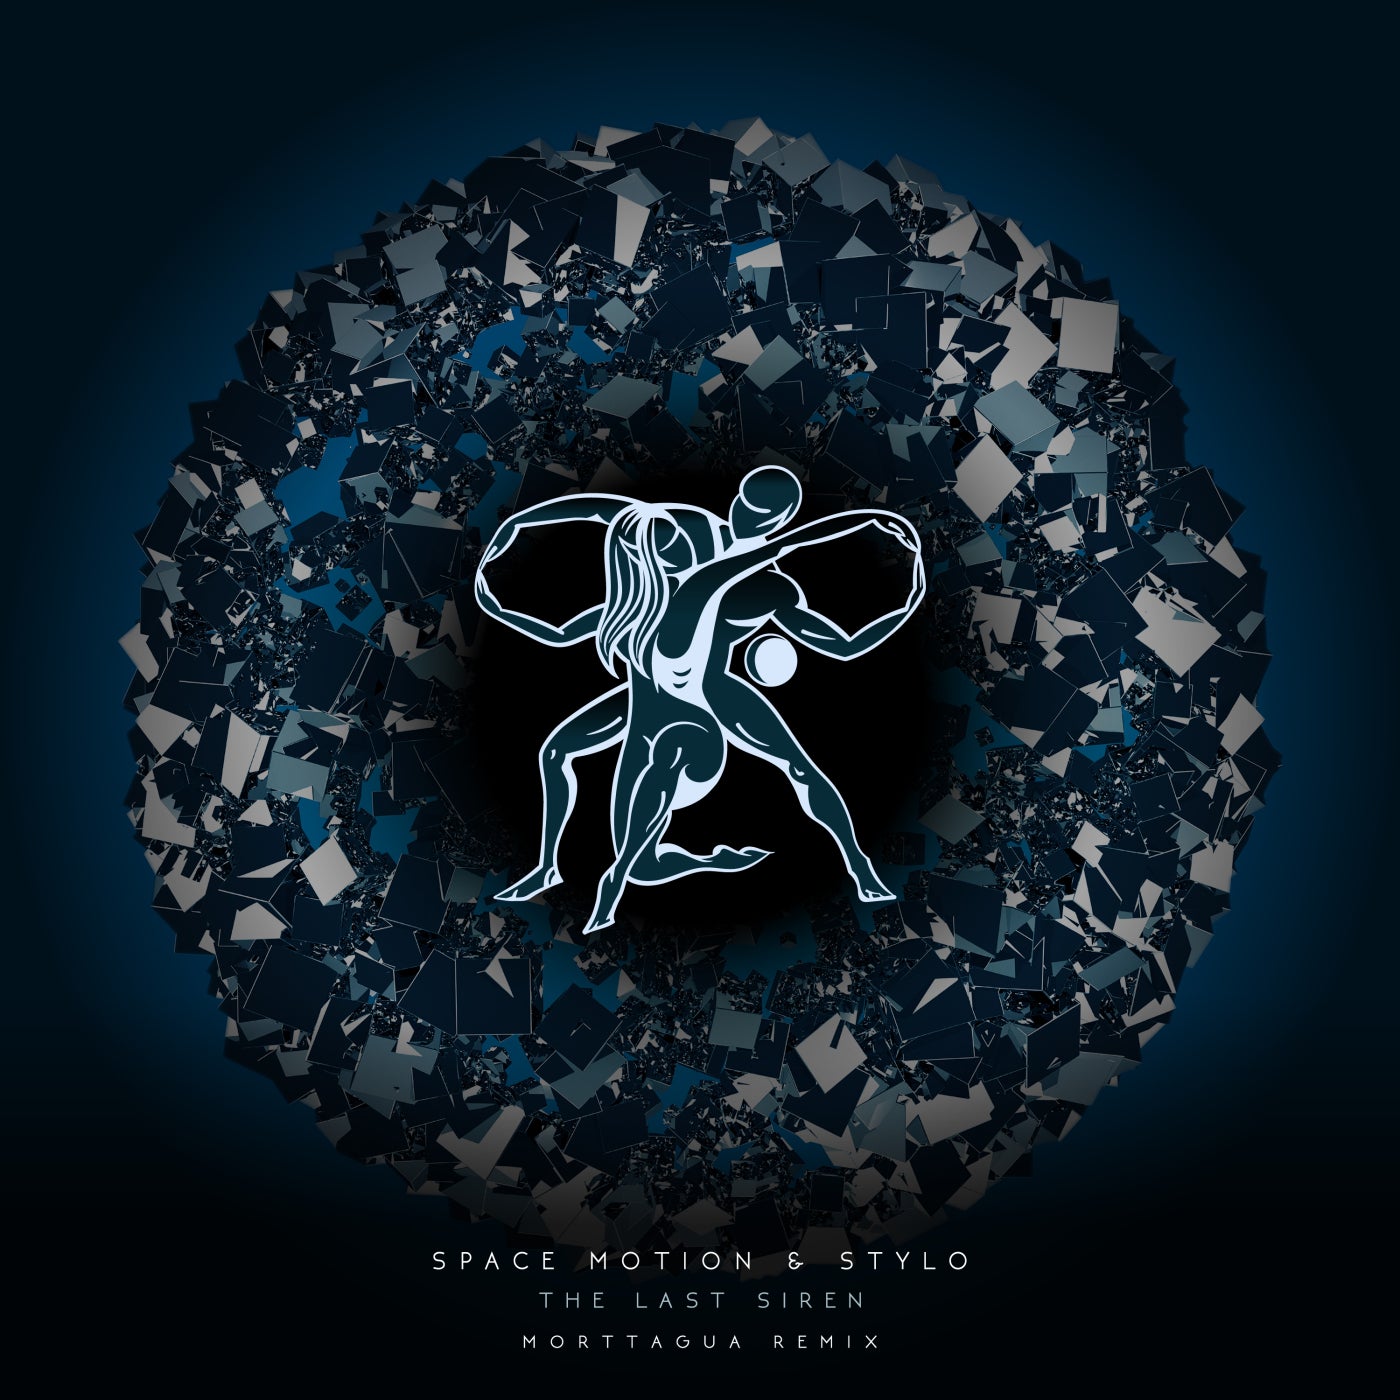 Space Motion & Stylo - The Last Siren (Morttagua Remix)